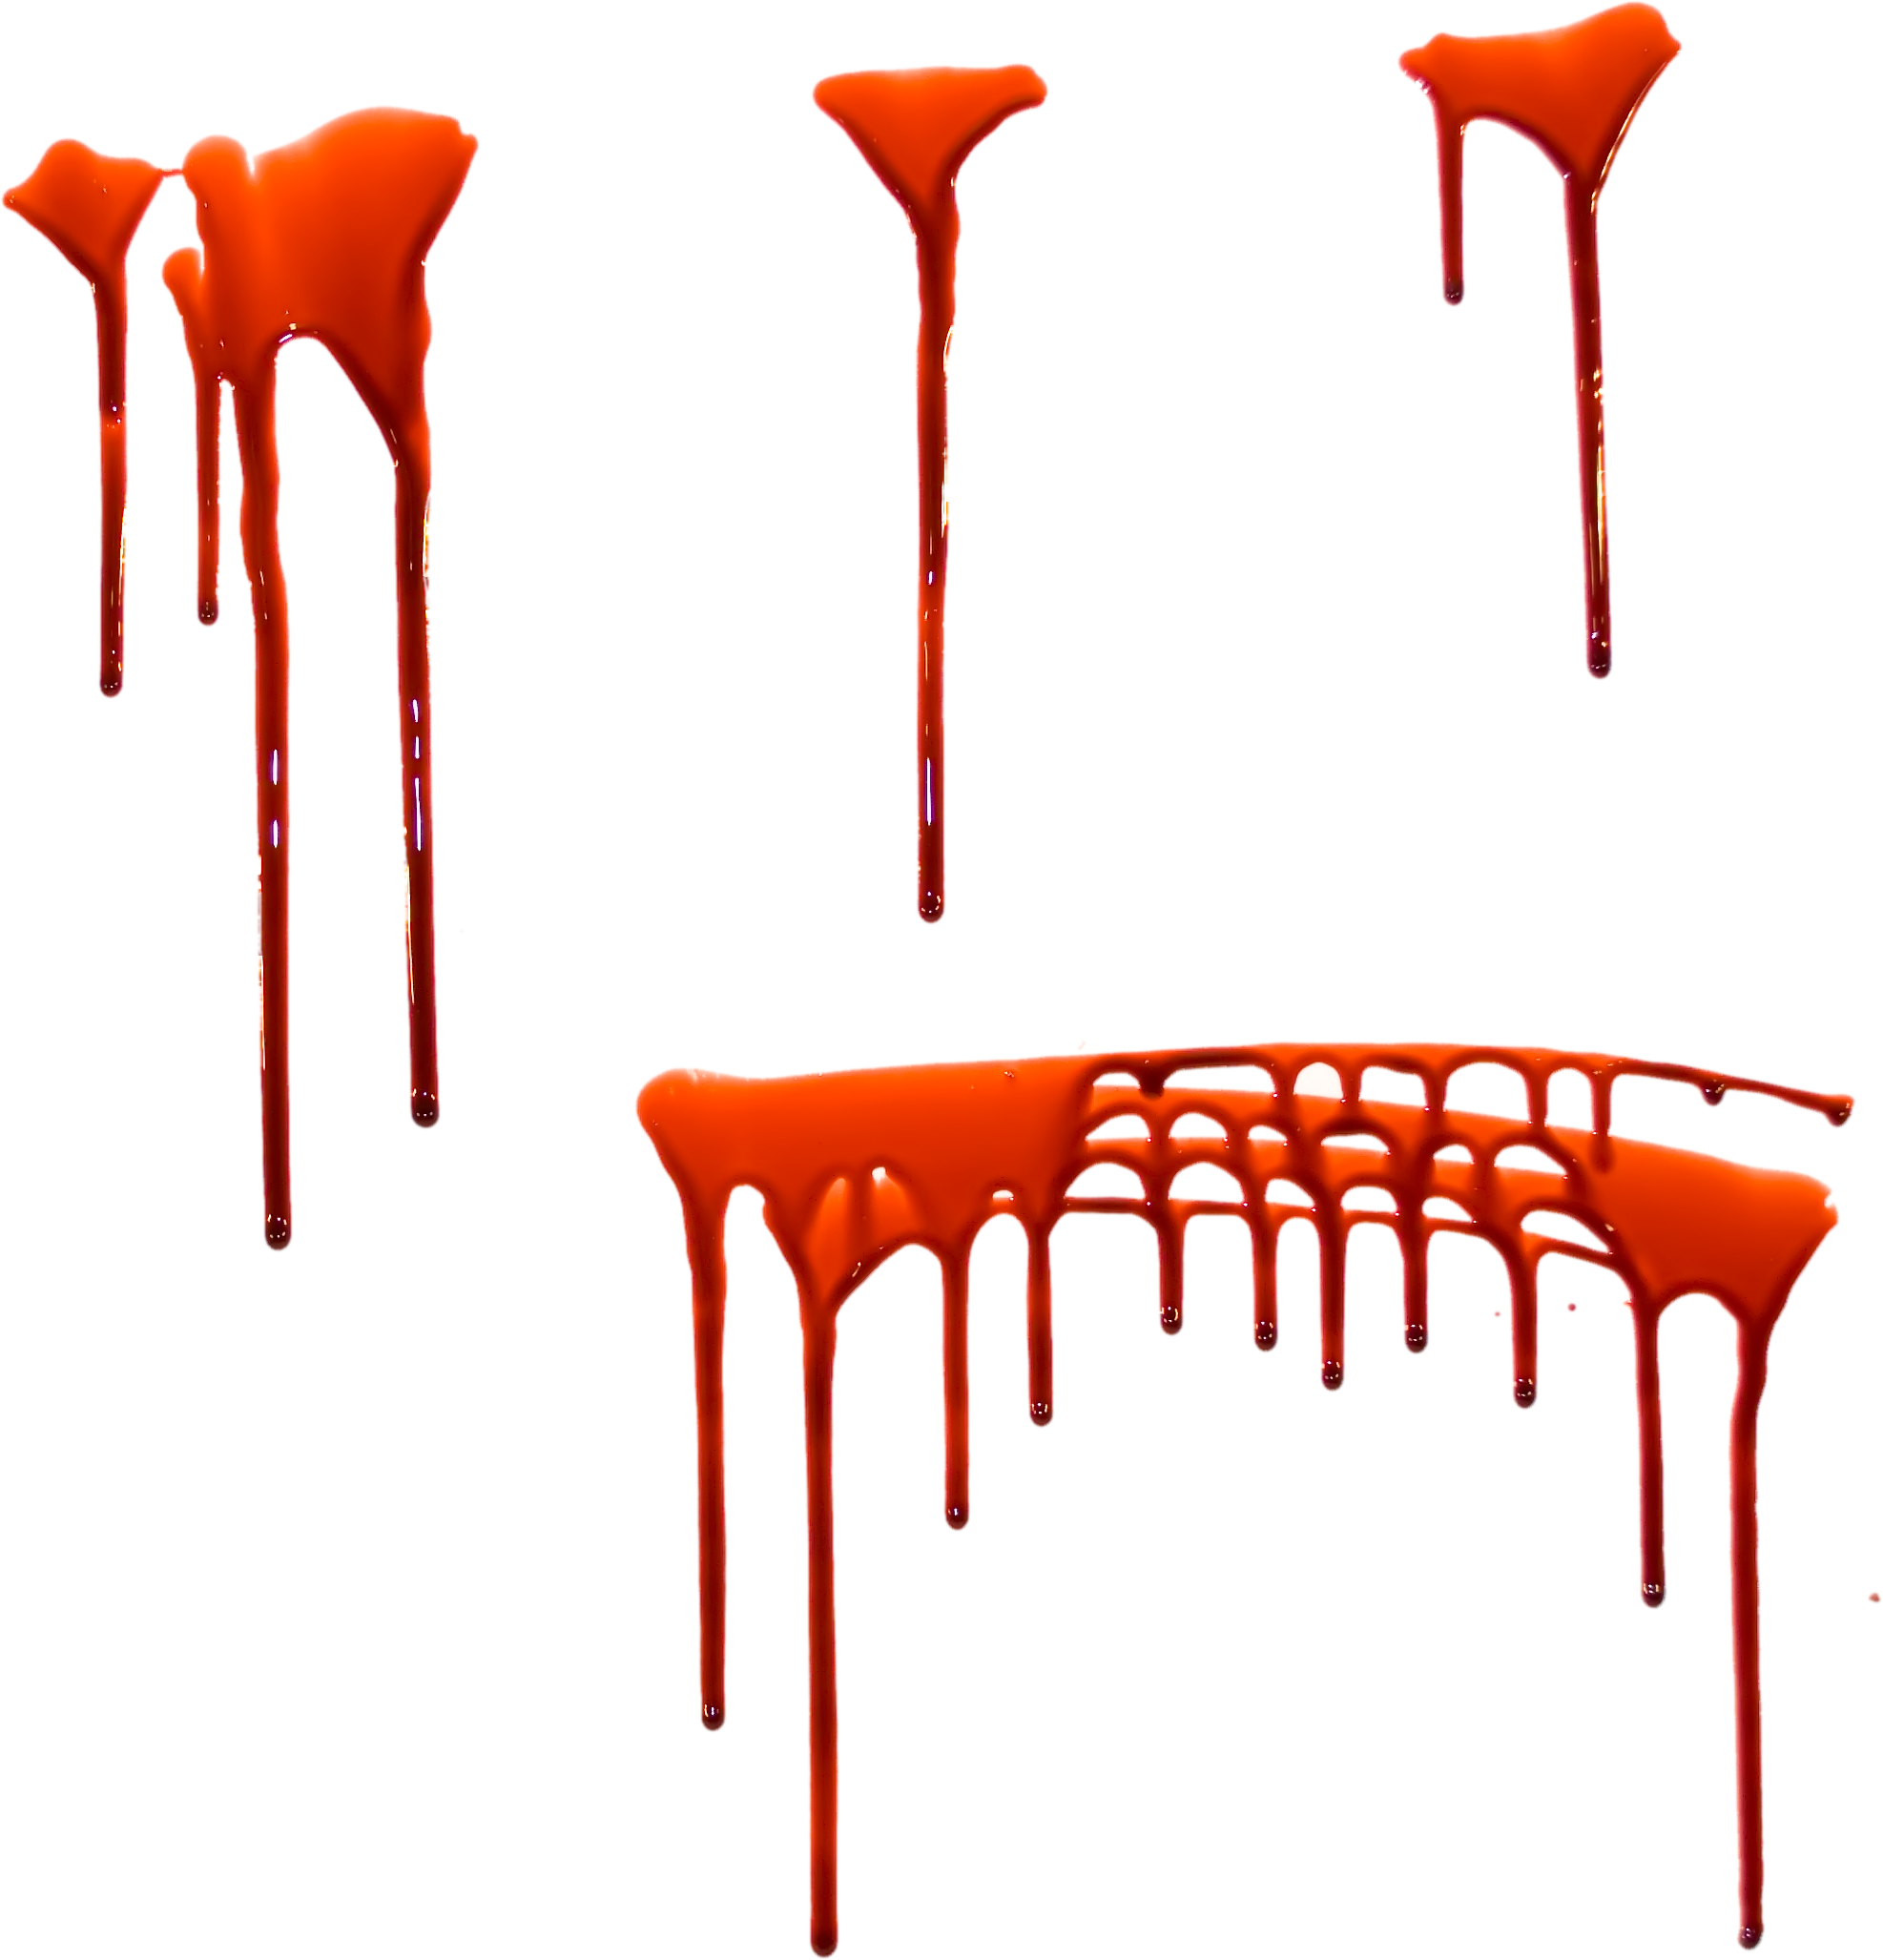 Blood Wallpaper - Blood PNG image png download - 1974*2055 - Free ...